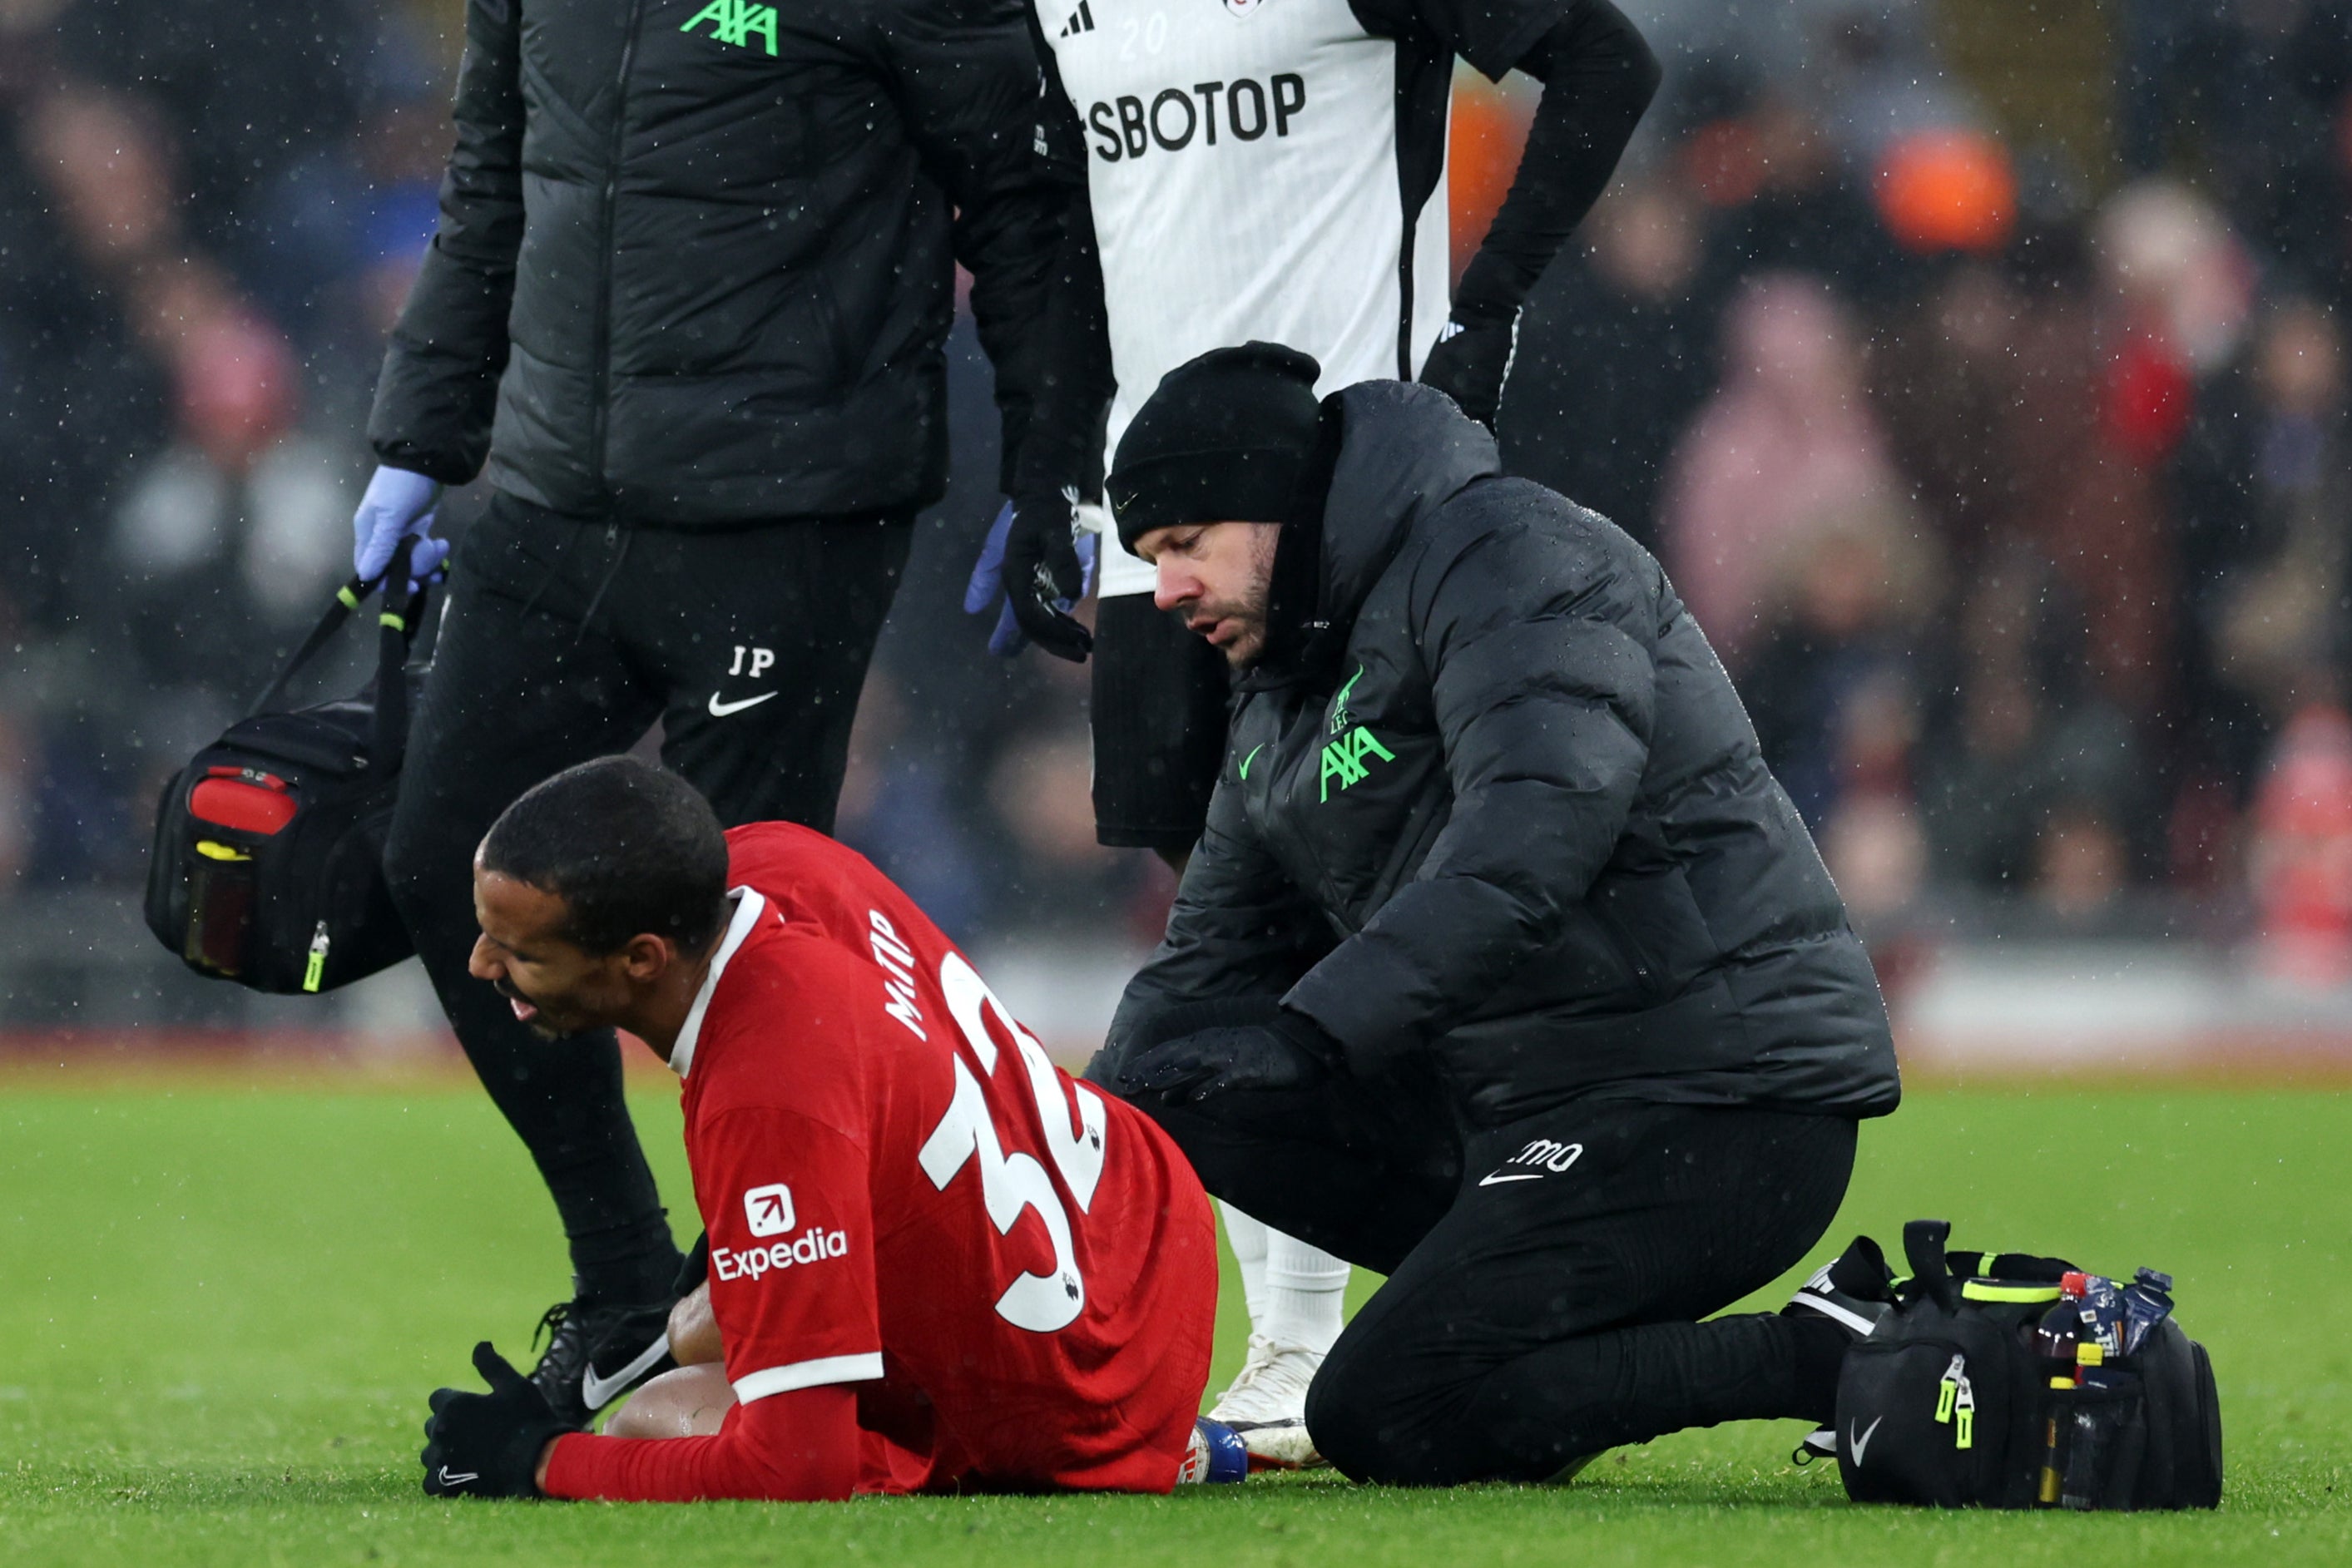 Joel Matip suffered a season-ending injury against Fulham